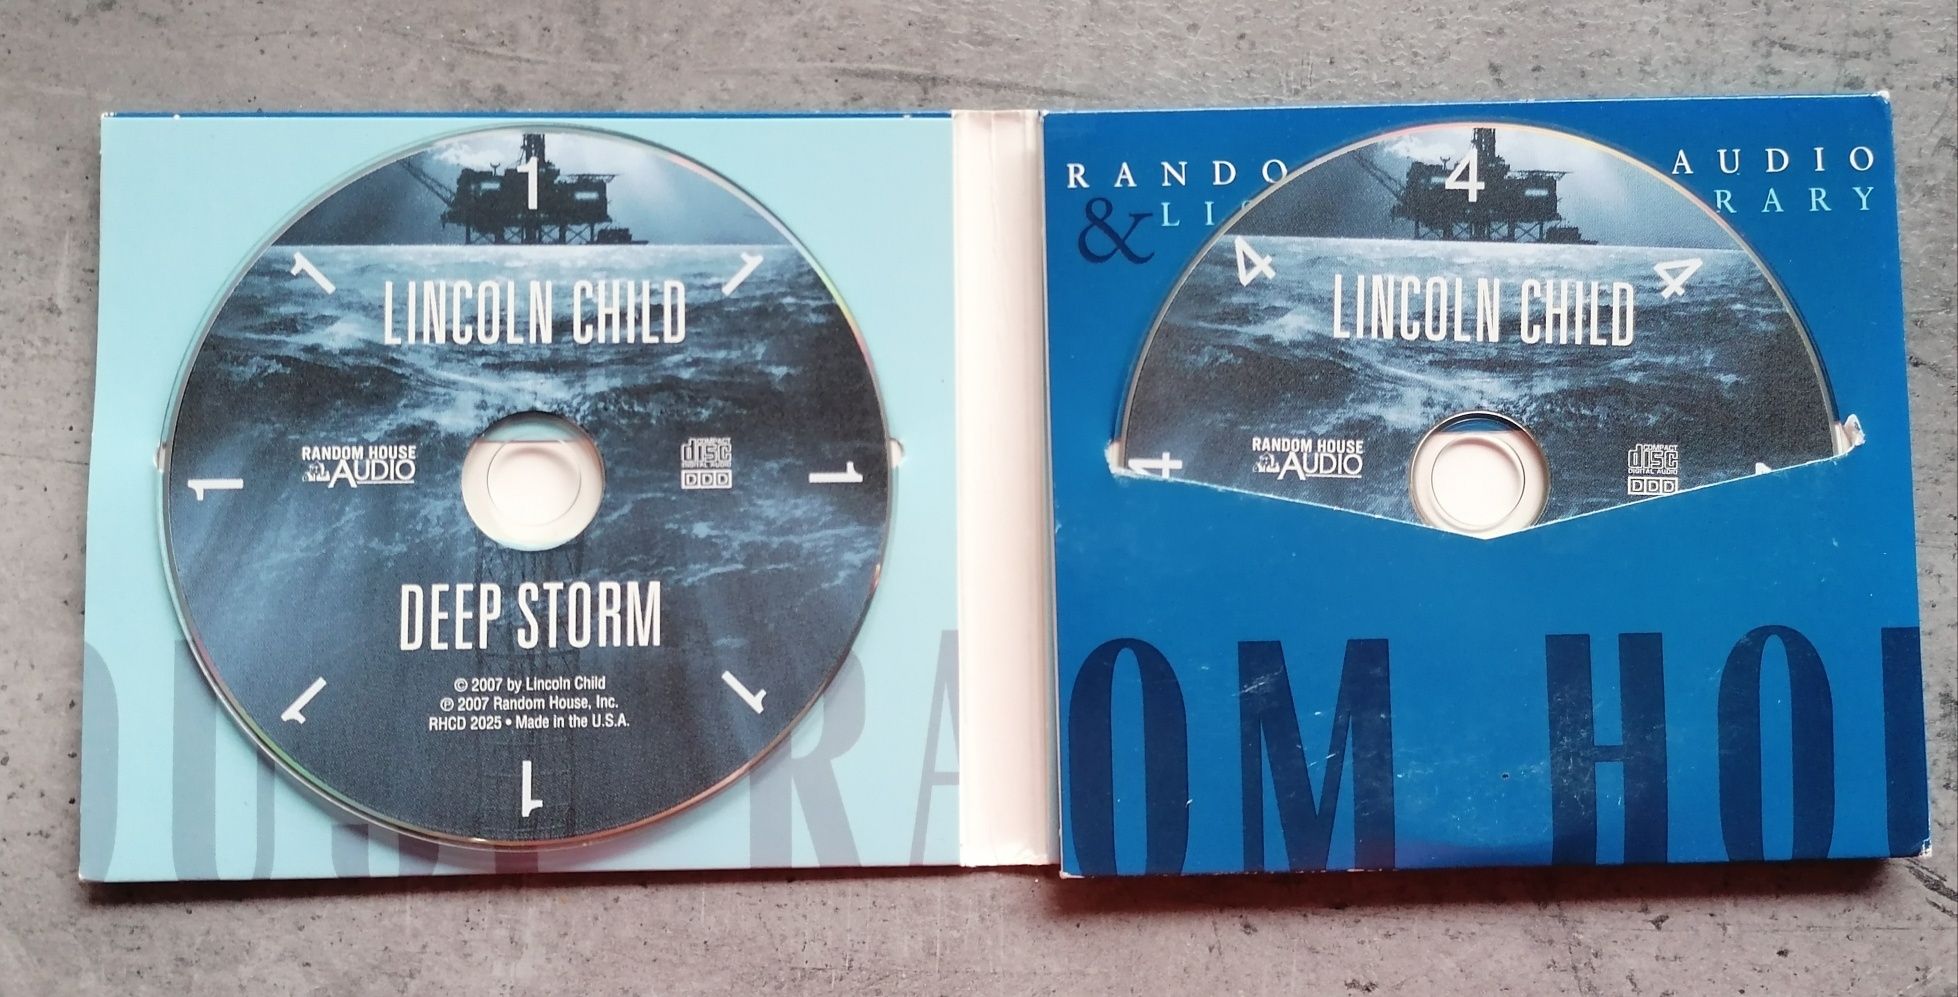 Audiobook angielski 6 CD, Deep storm, Lincoln Child